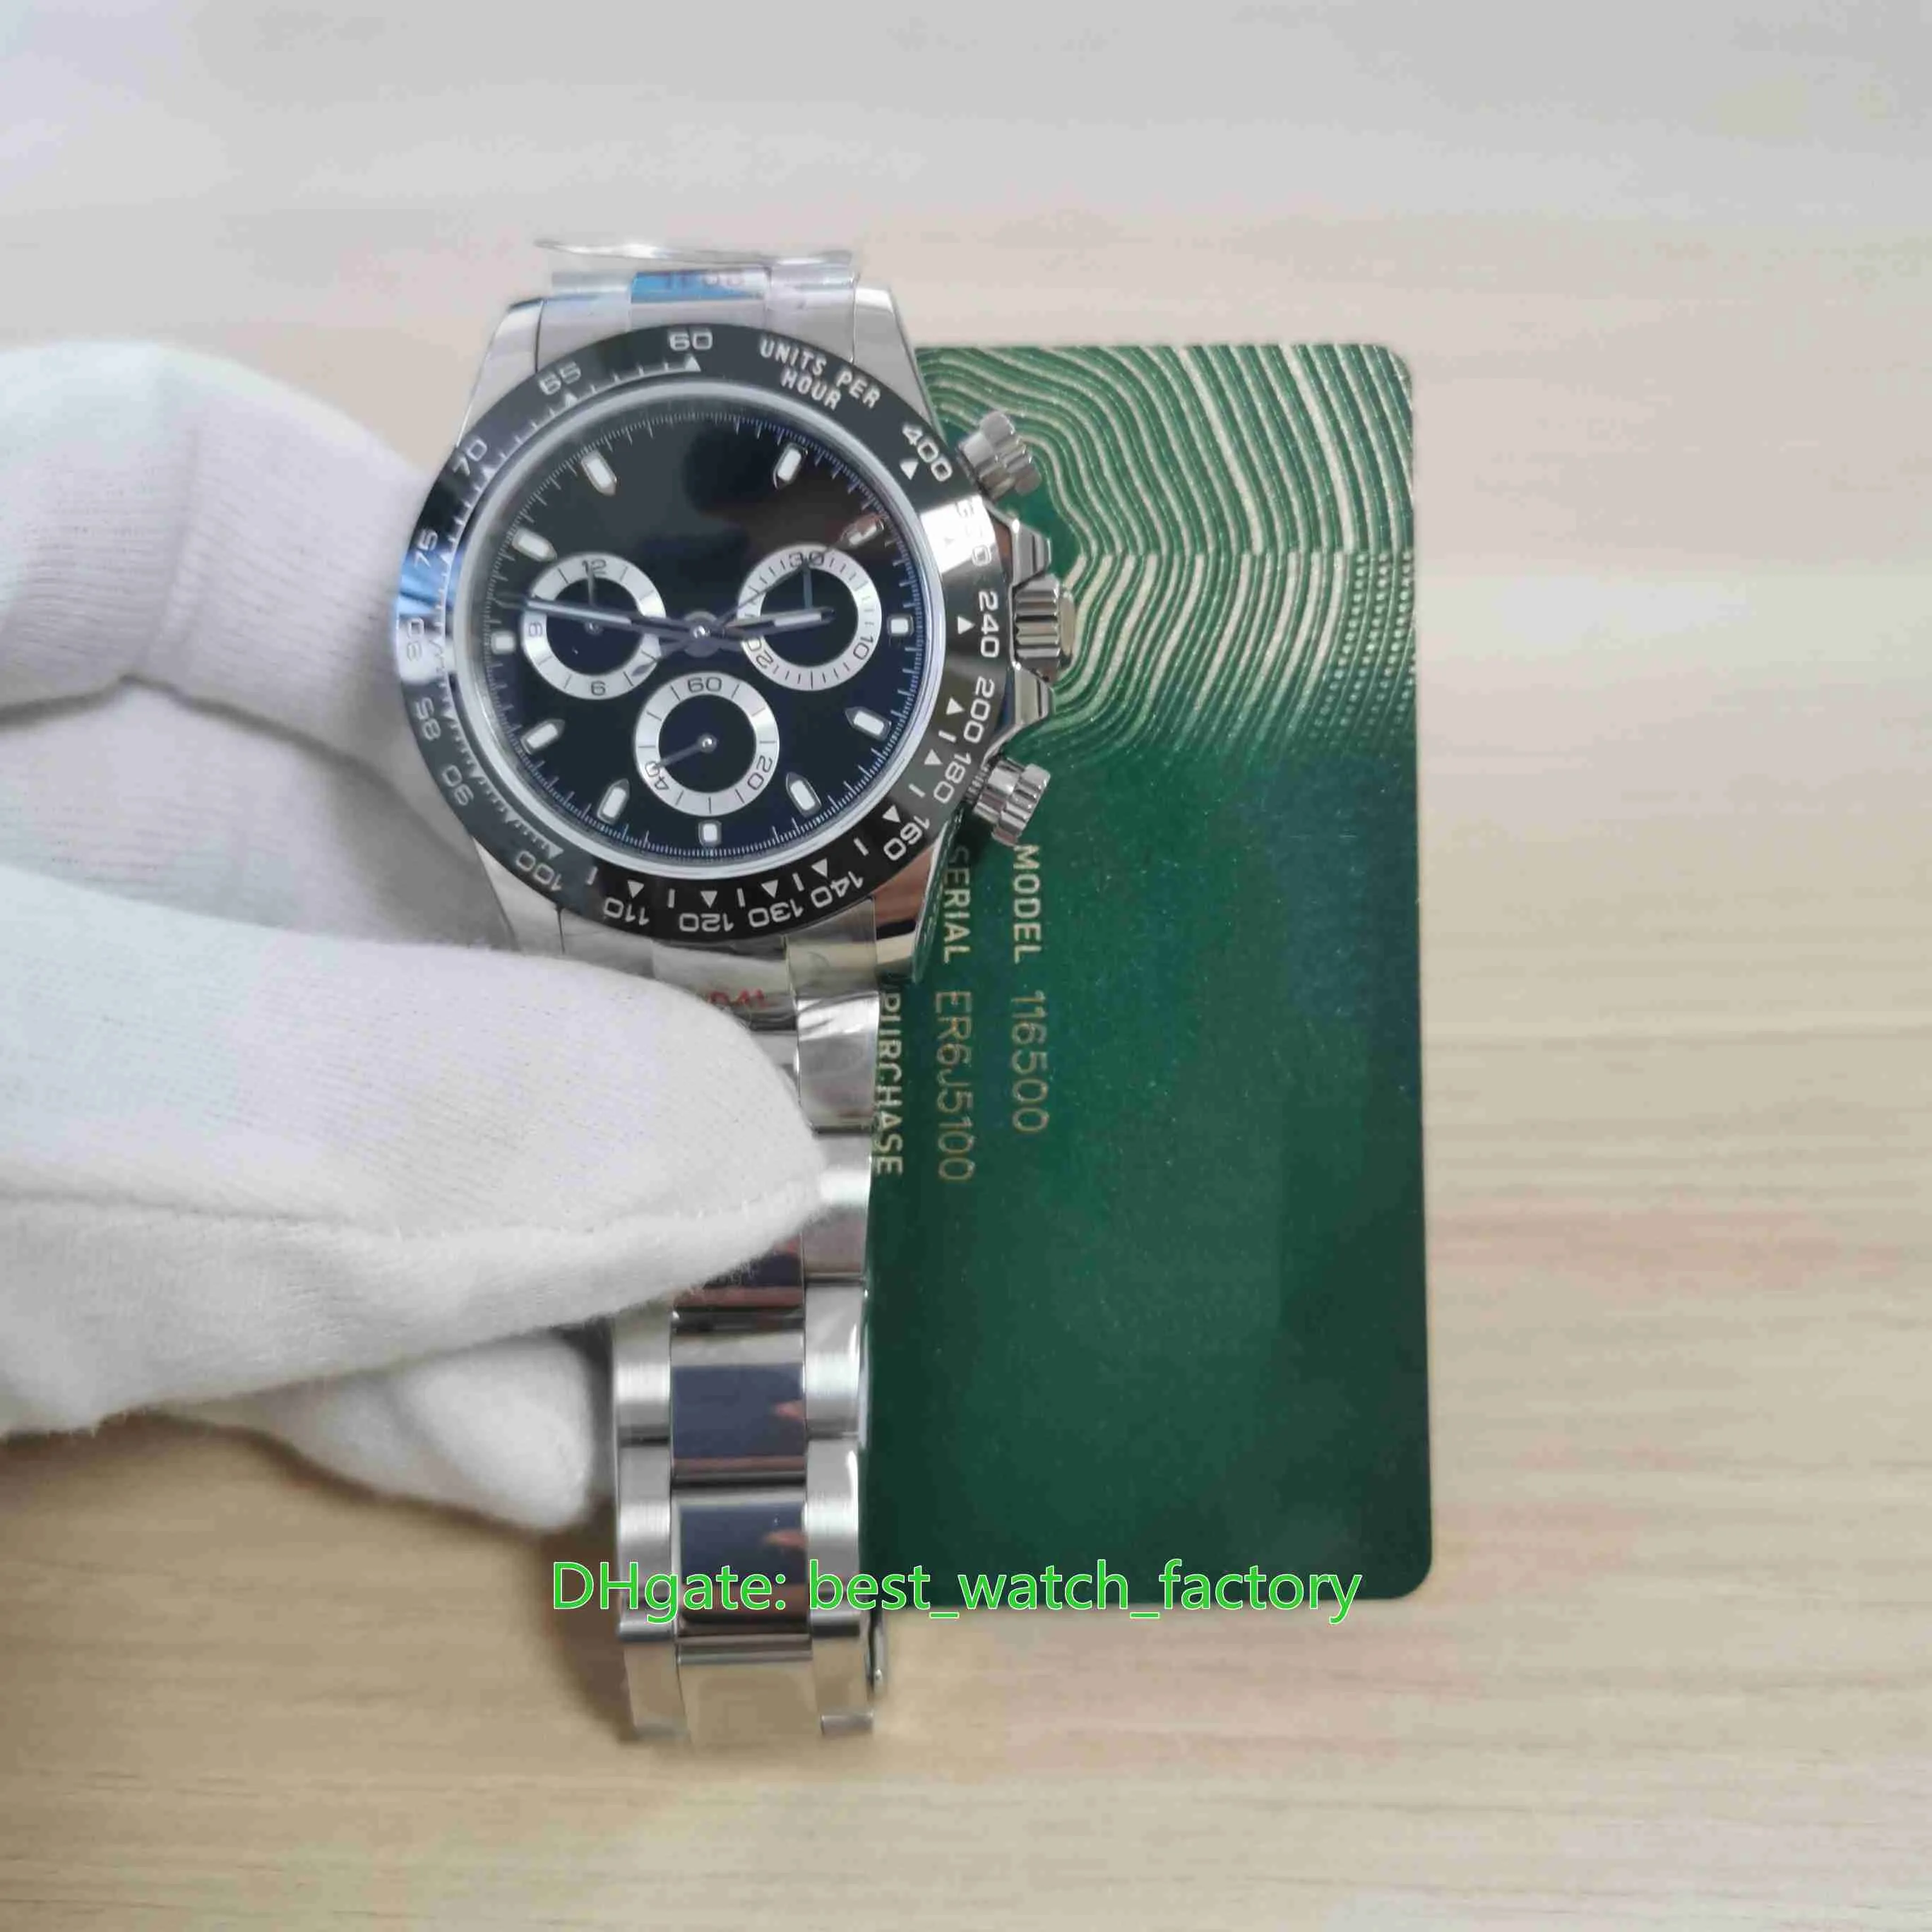 EW Factory Top Quality Watches 40mm x 13mm 116500-0002 KOSMOGRAPH EXTO-THIN CERAMIC CHRONOGRAPH ETA 7750 MEKANISK AUTOMATISKA MEN279Y